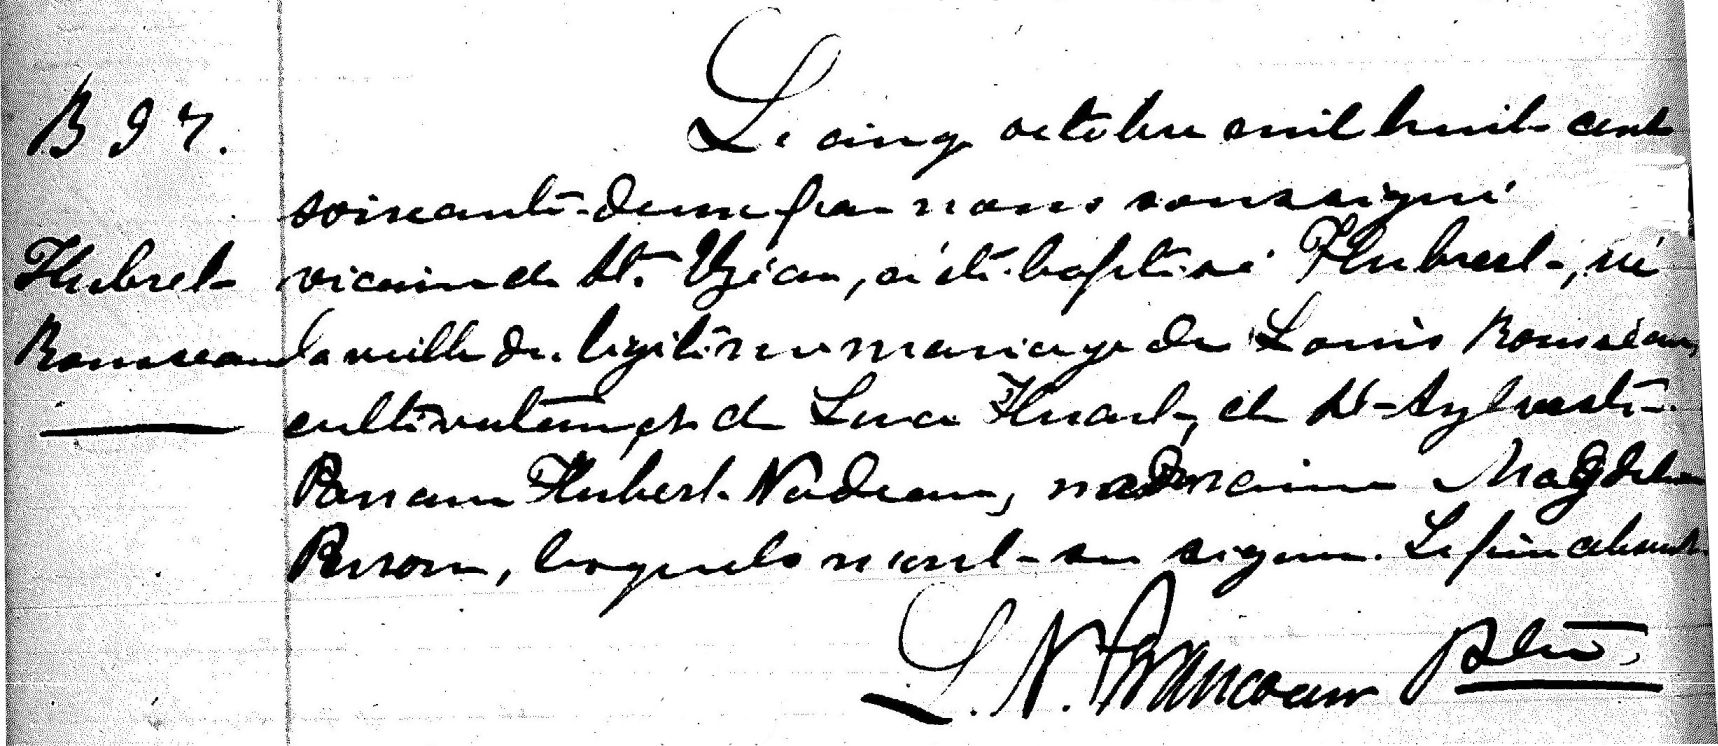 Records for Paroisse St. Elezar showing Baptism Entry for Hubert Rousseau